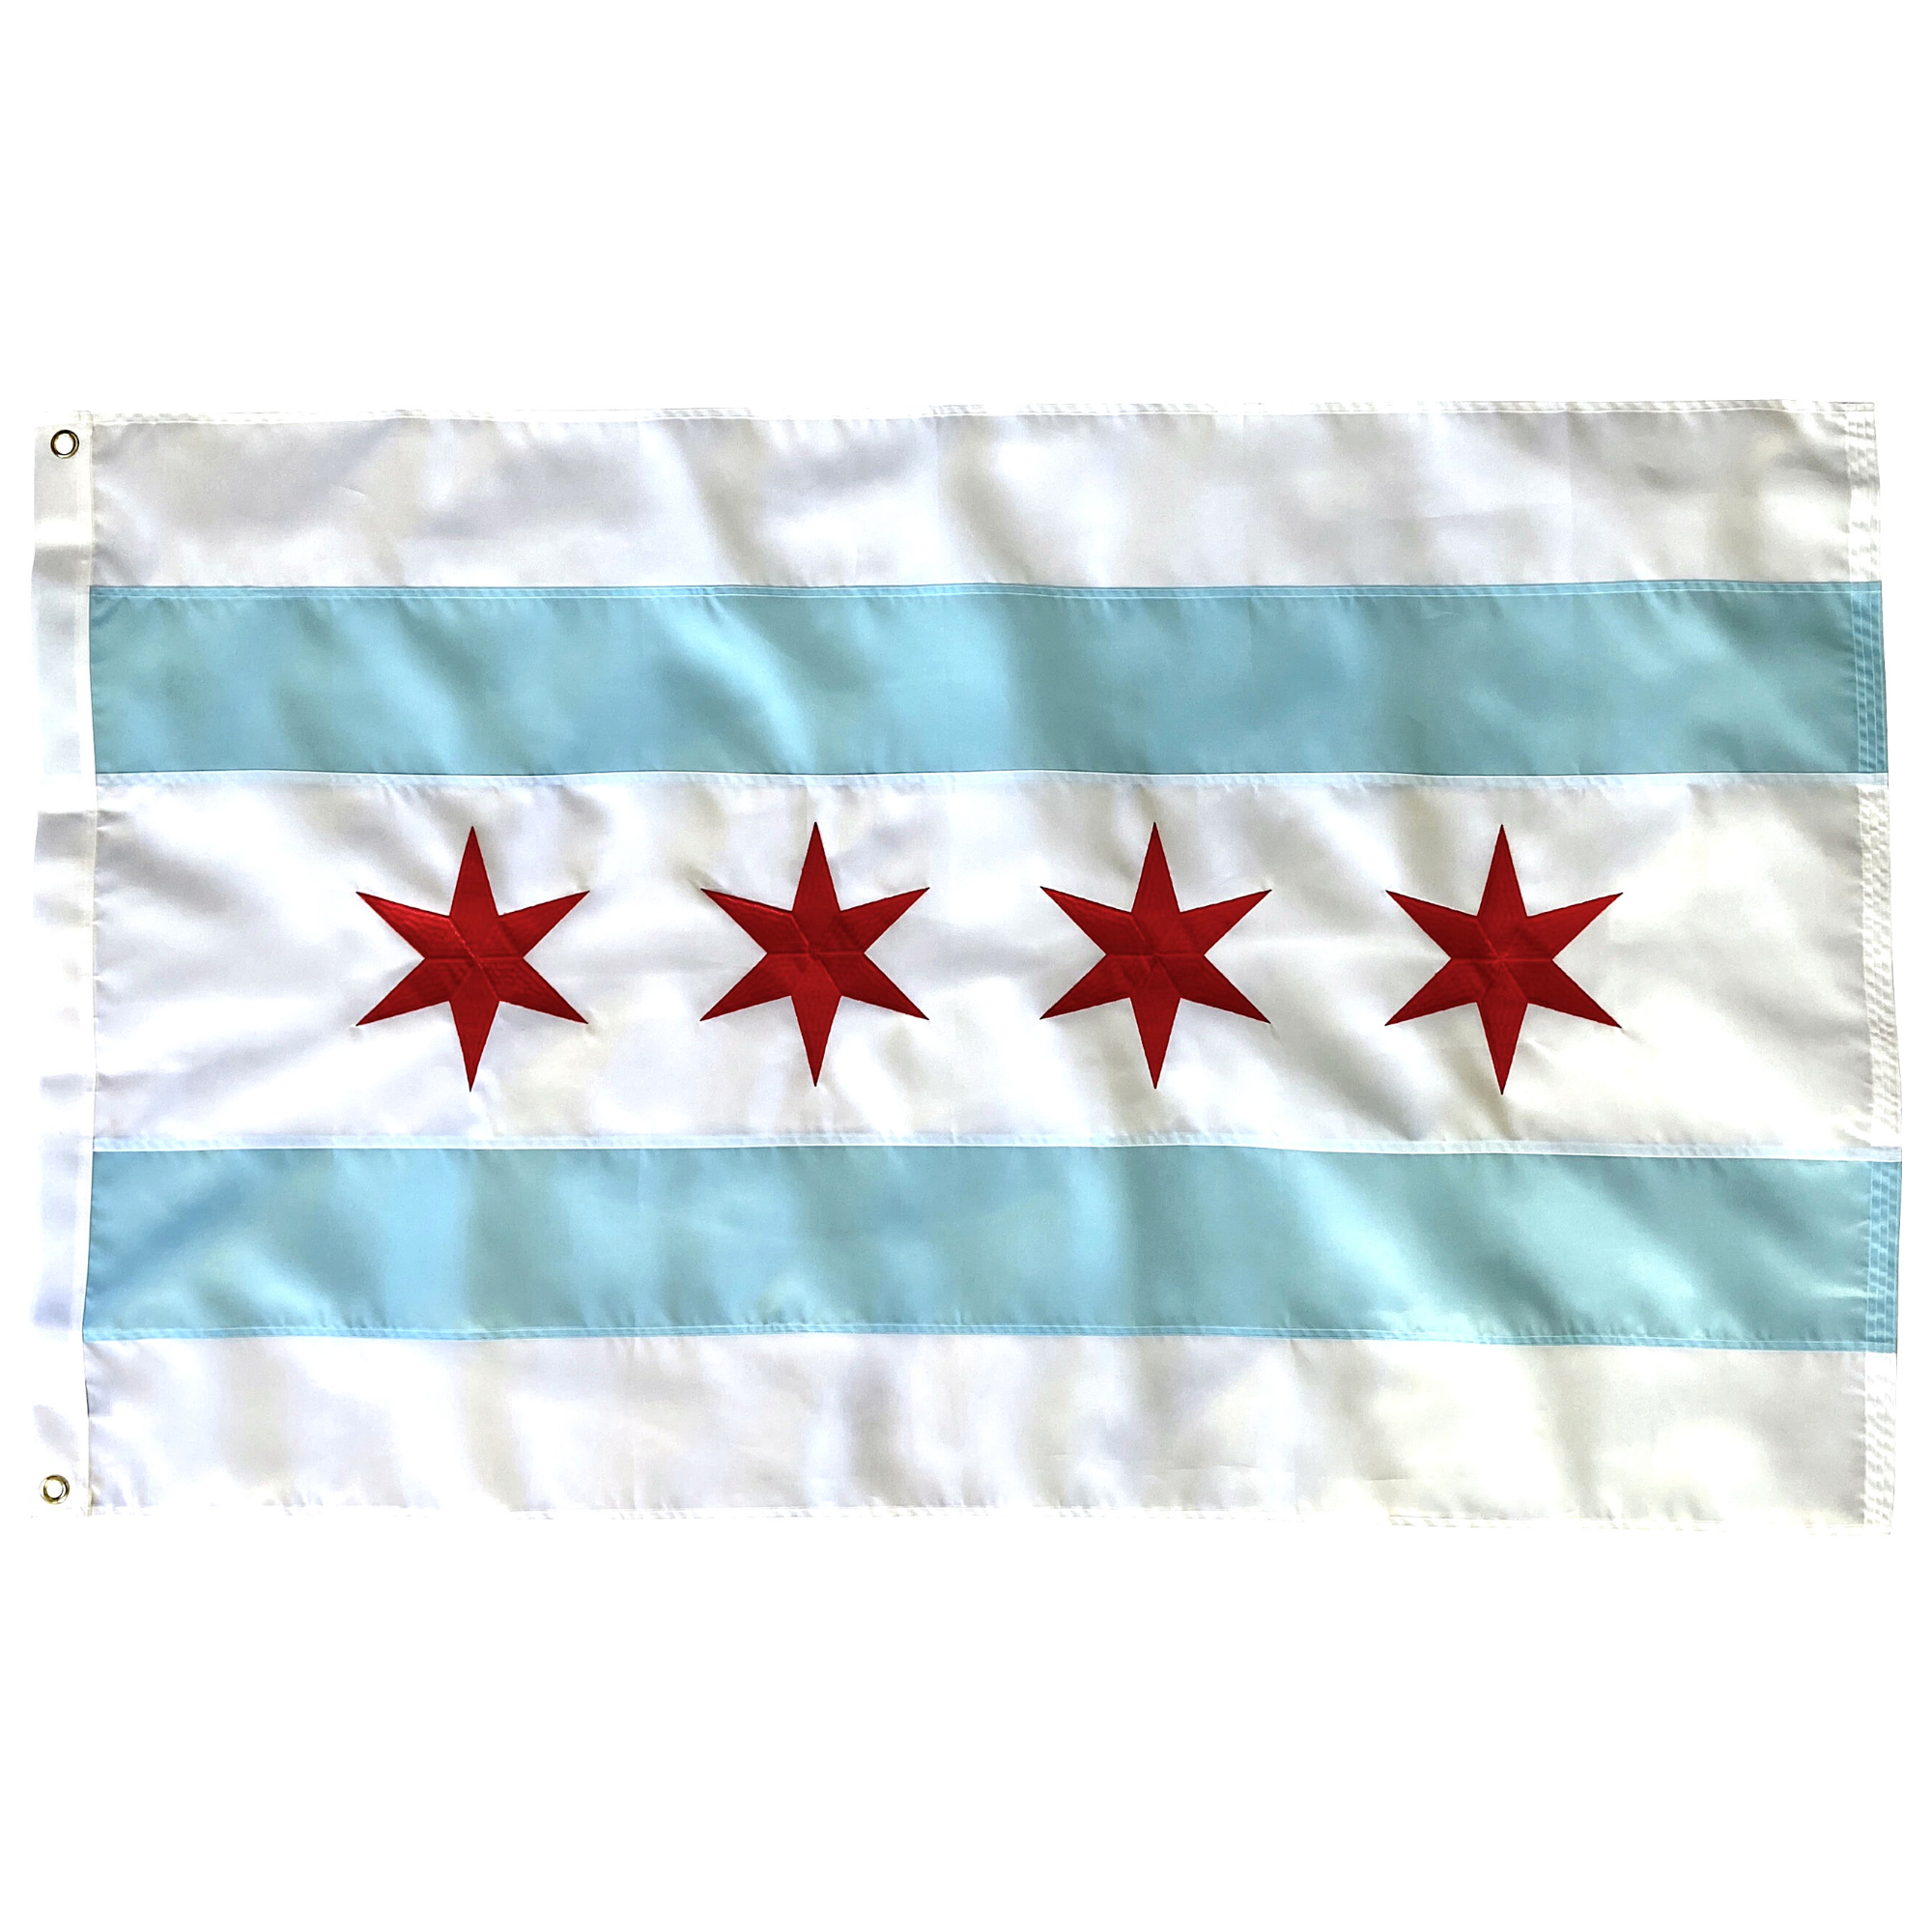 Windy City 3'x5' Chicago Flag